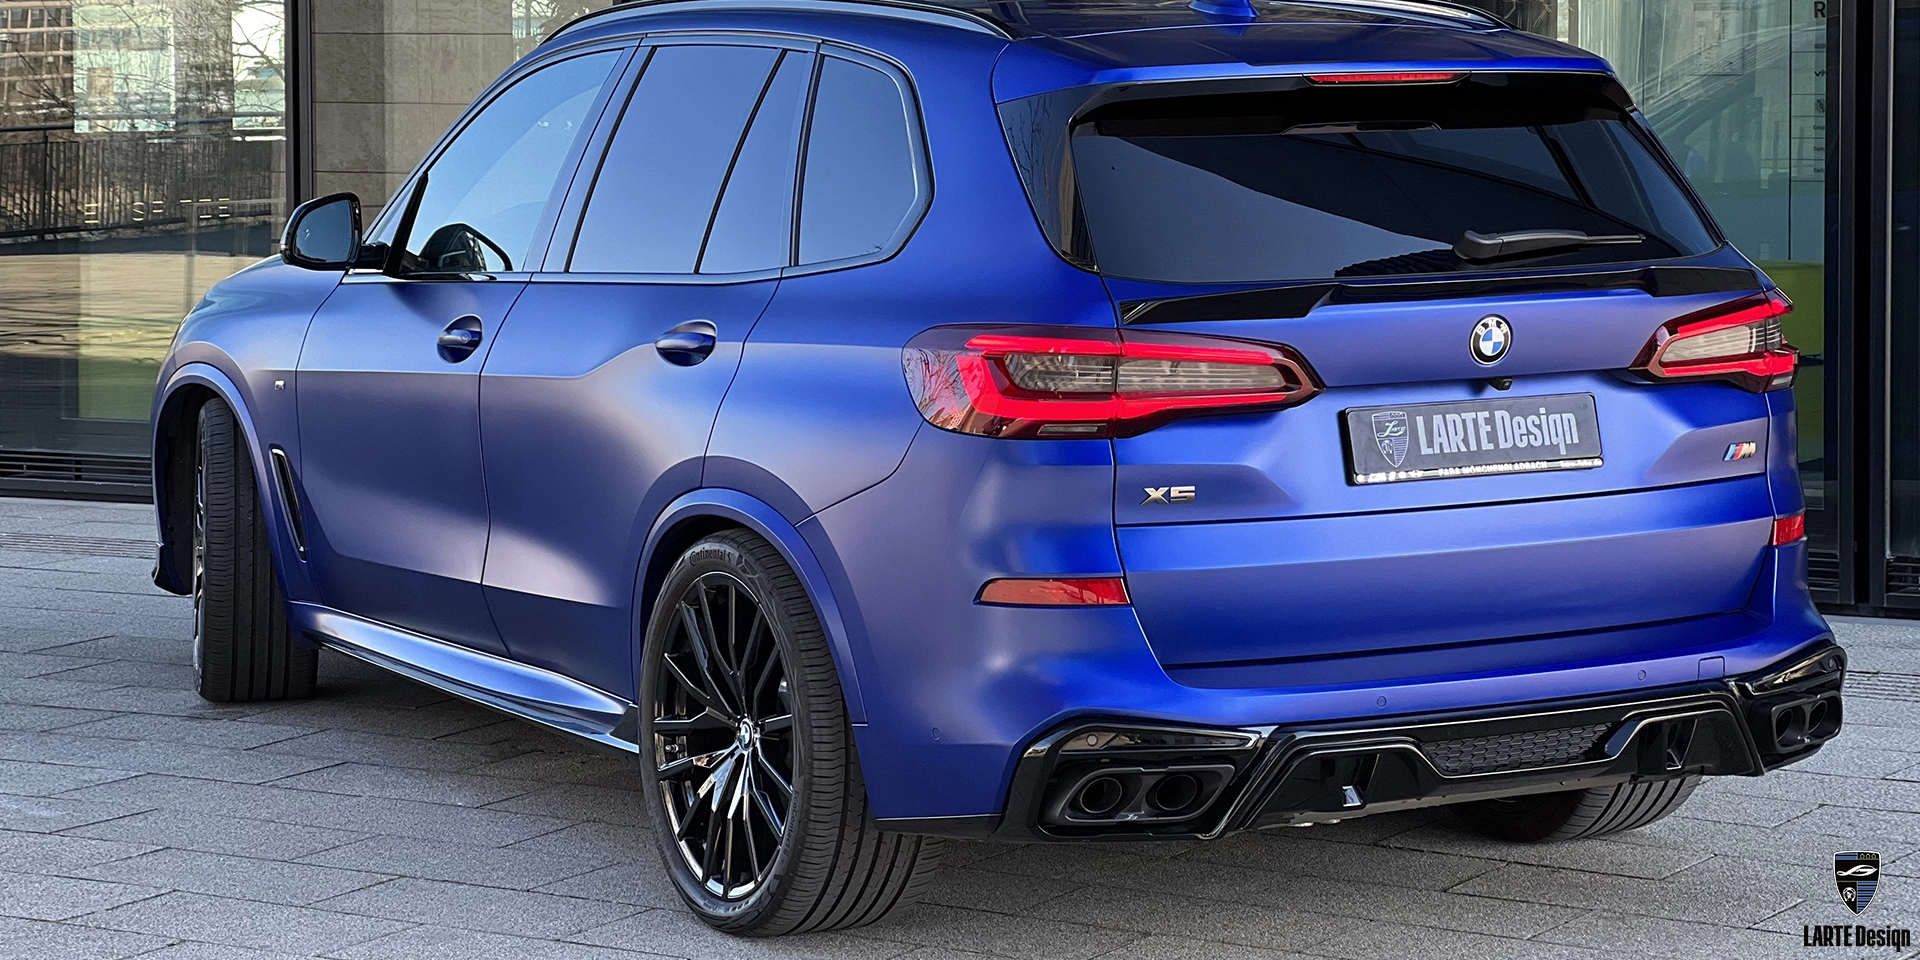 Order new carbon fiber exhaust tips for BMW X5 M sport G05 Phytonic Blue Metallic 2022